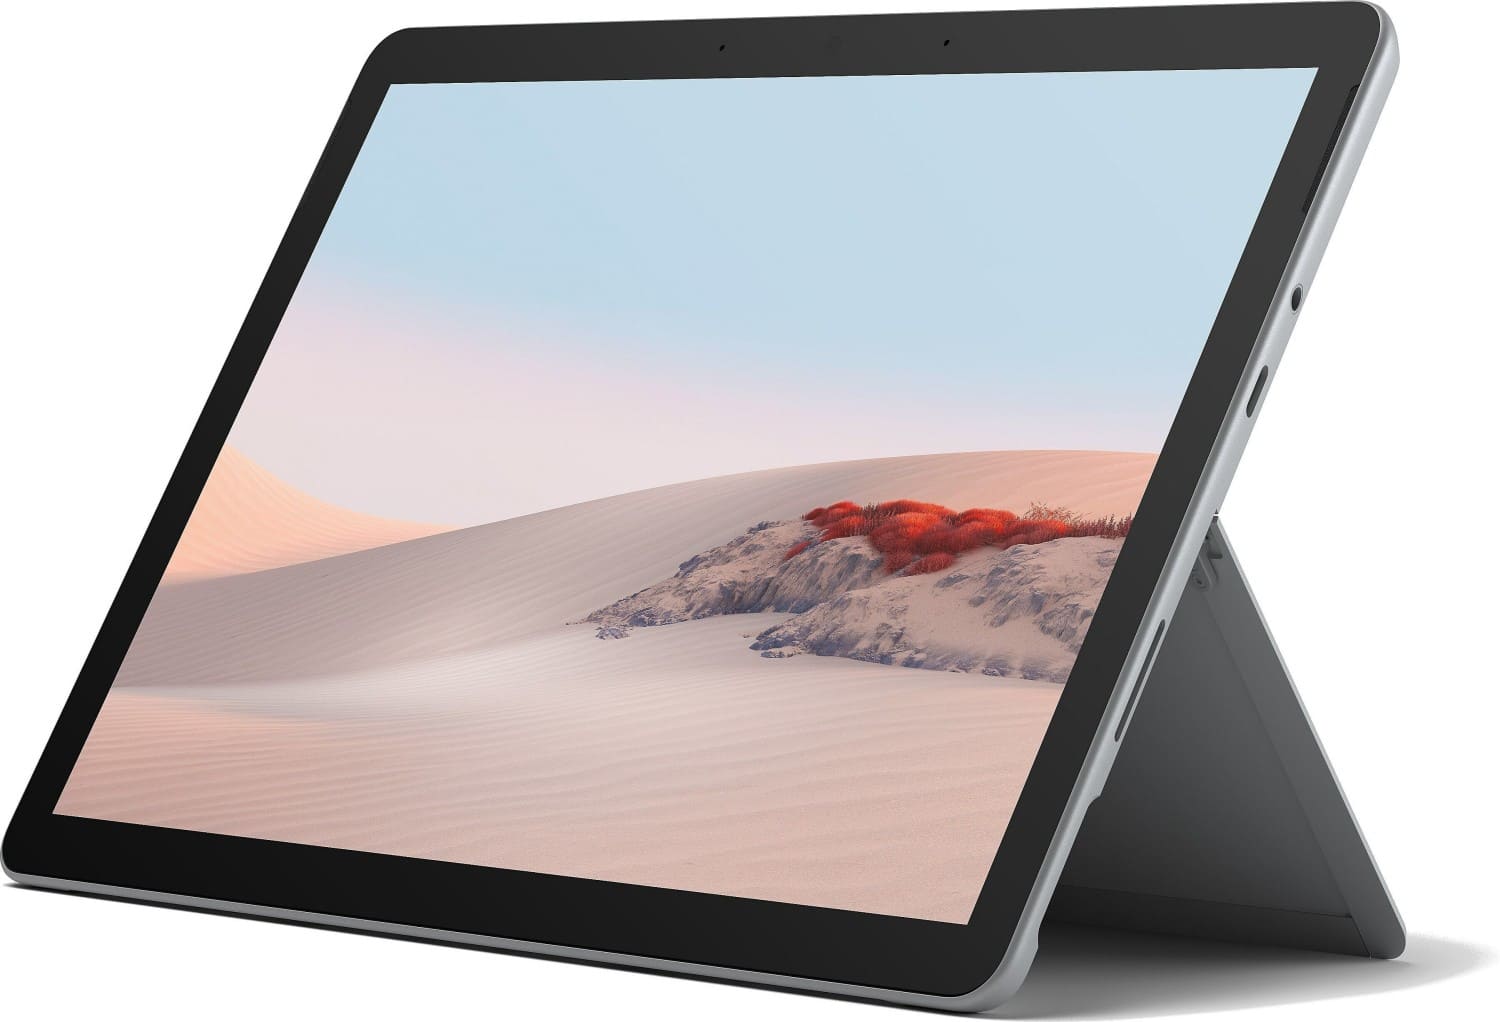 Microsoft Surface Go 2 | Pentium Gold 4425Y |10,5" | 4GB | 64GB SSD | Win 10 Pro | 2 in 1 Convertibel | Tablet und Laptop 